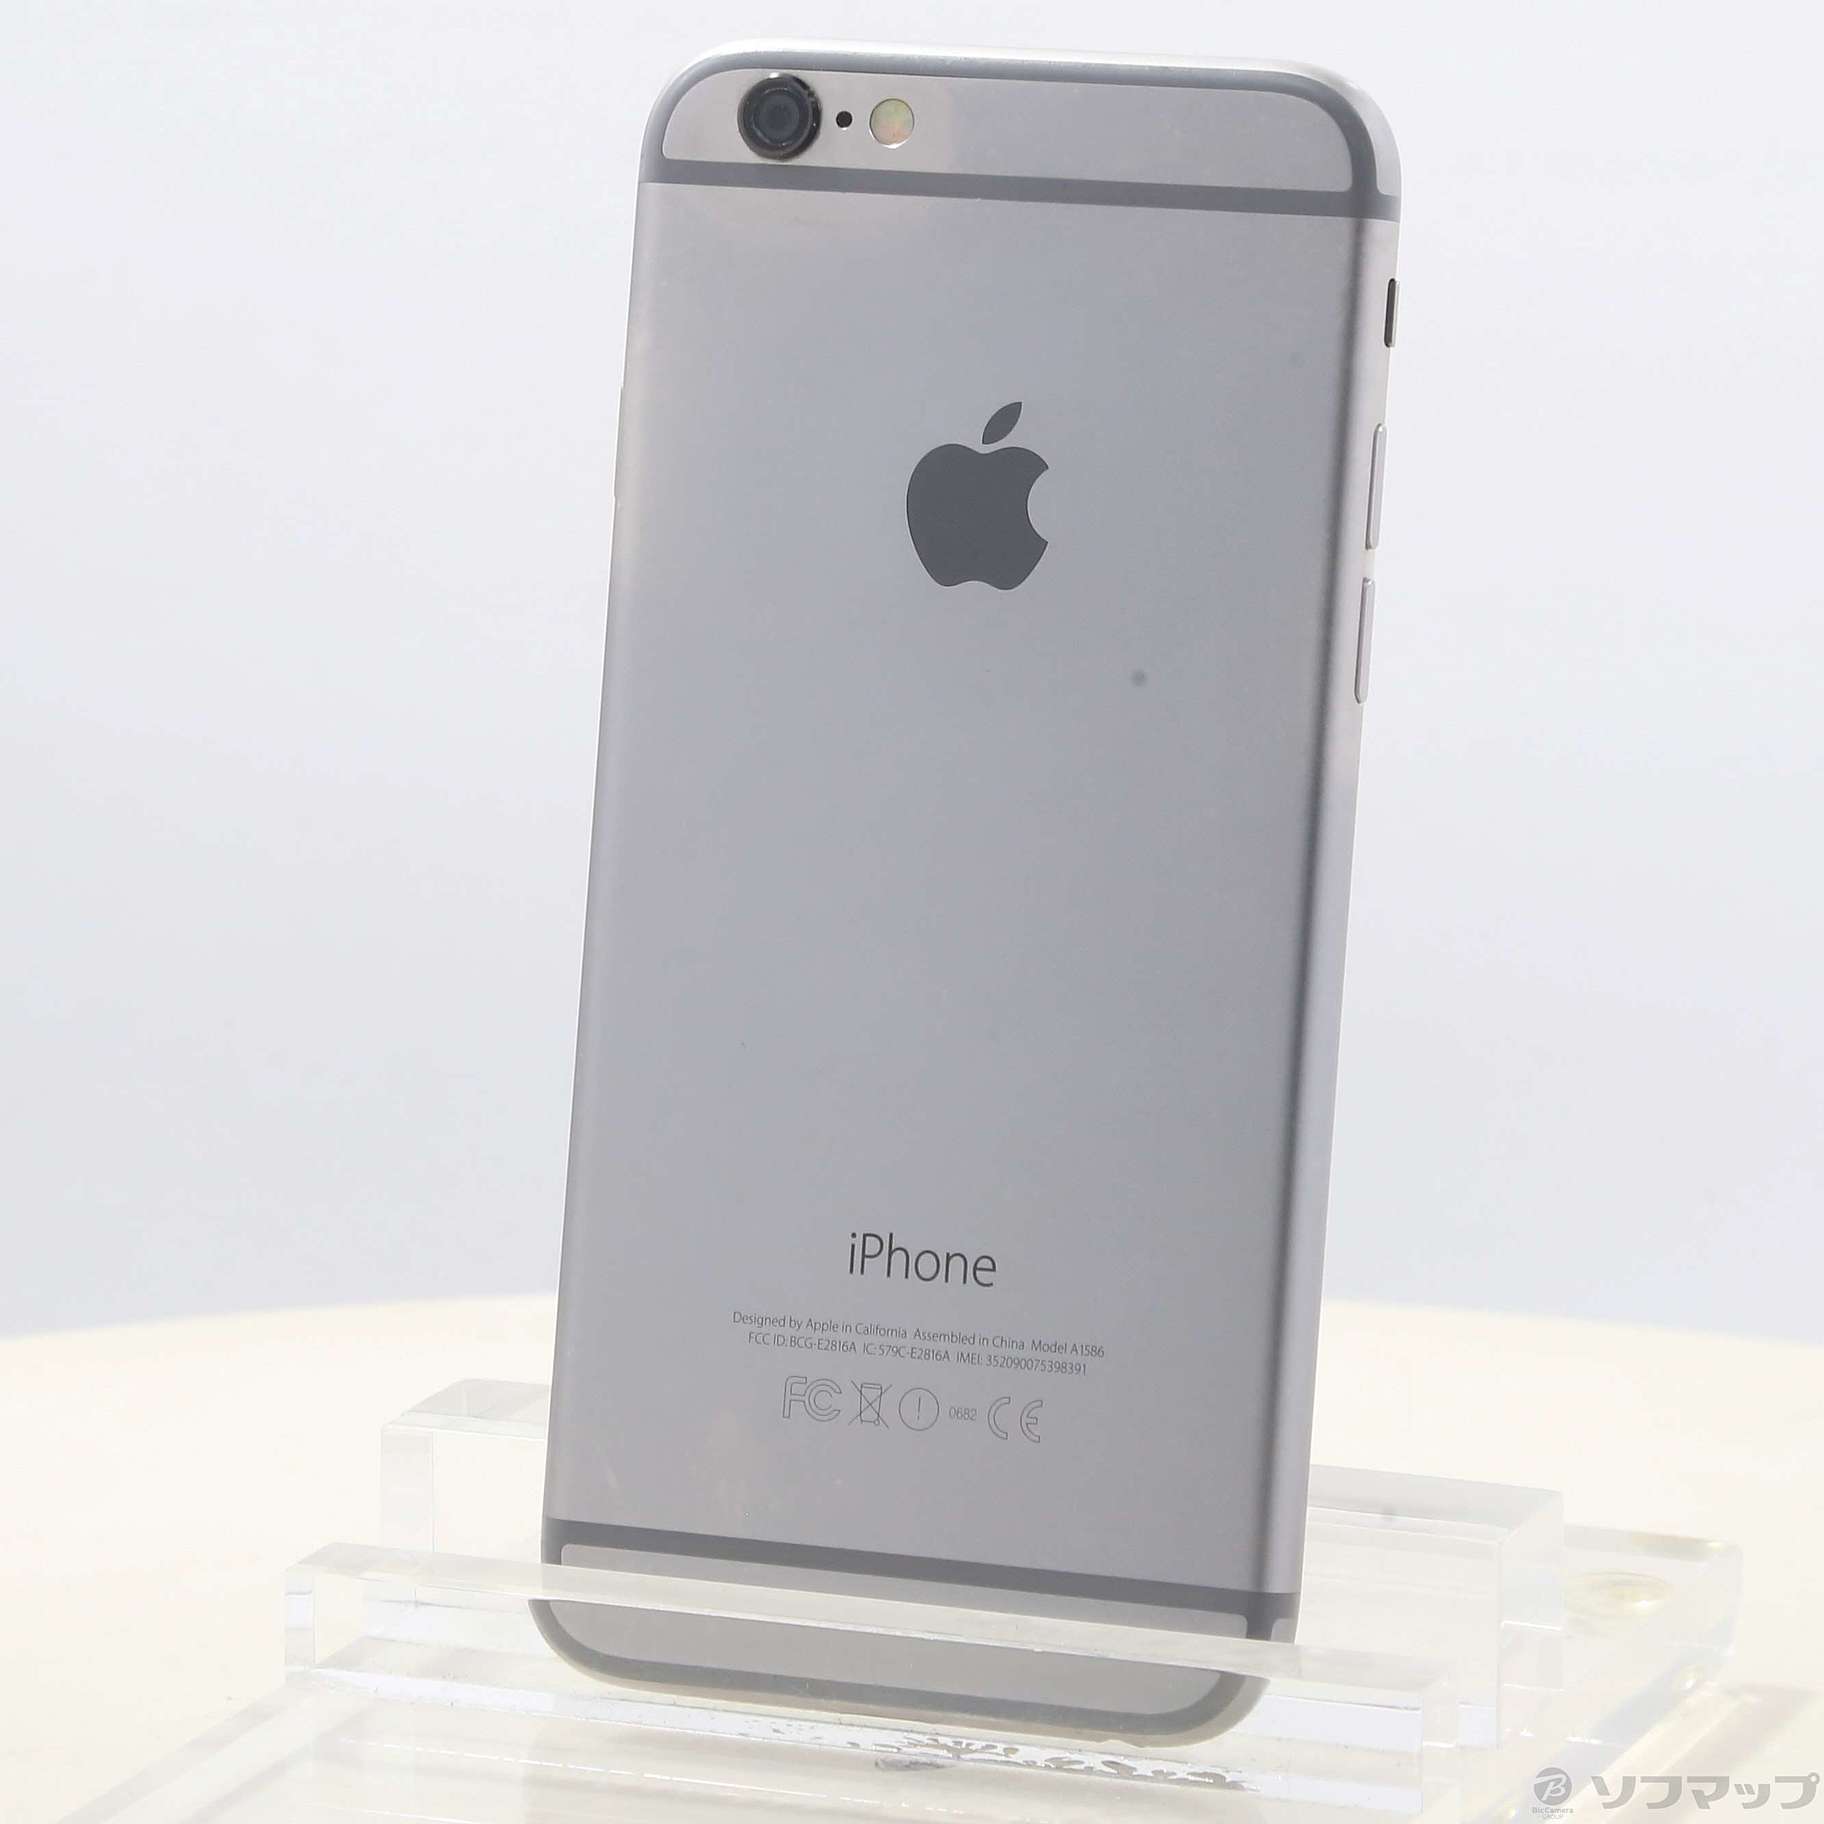 iPhone6 16GB スペースグレイスマートフォン/携帯電話